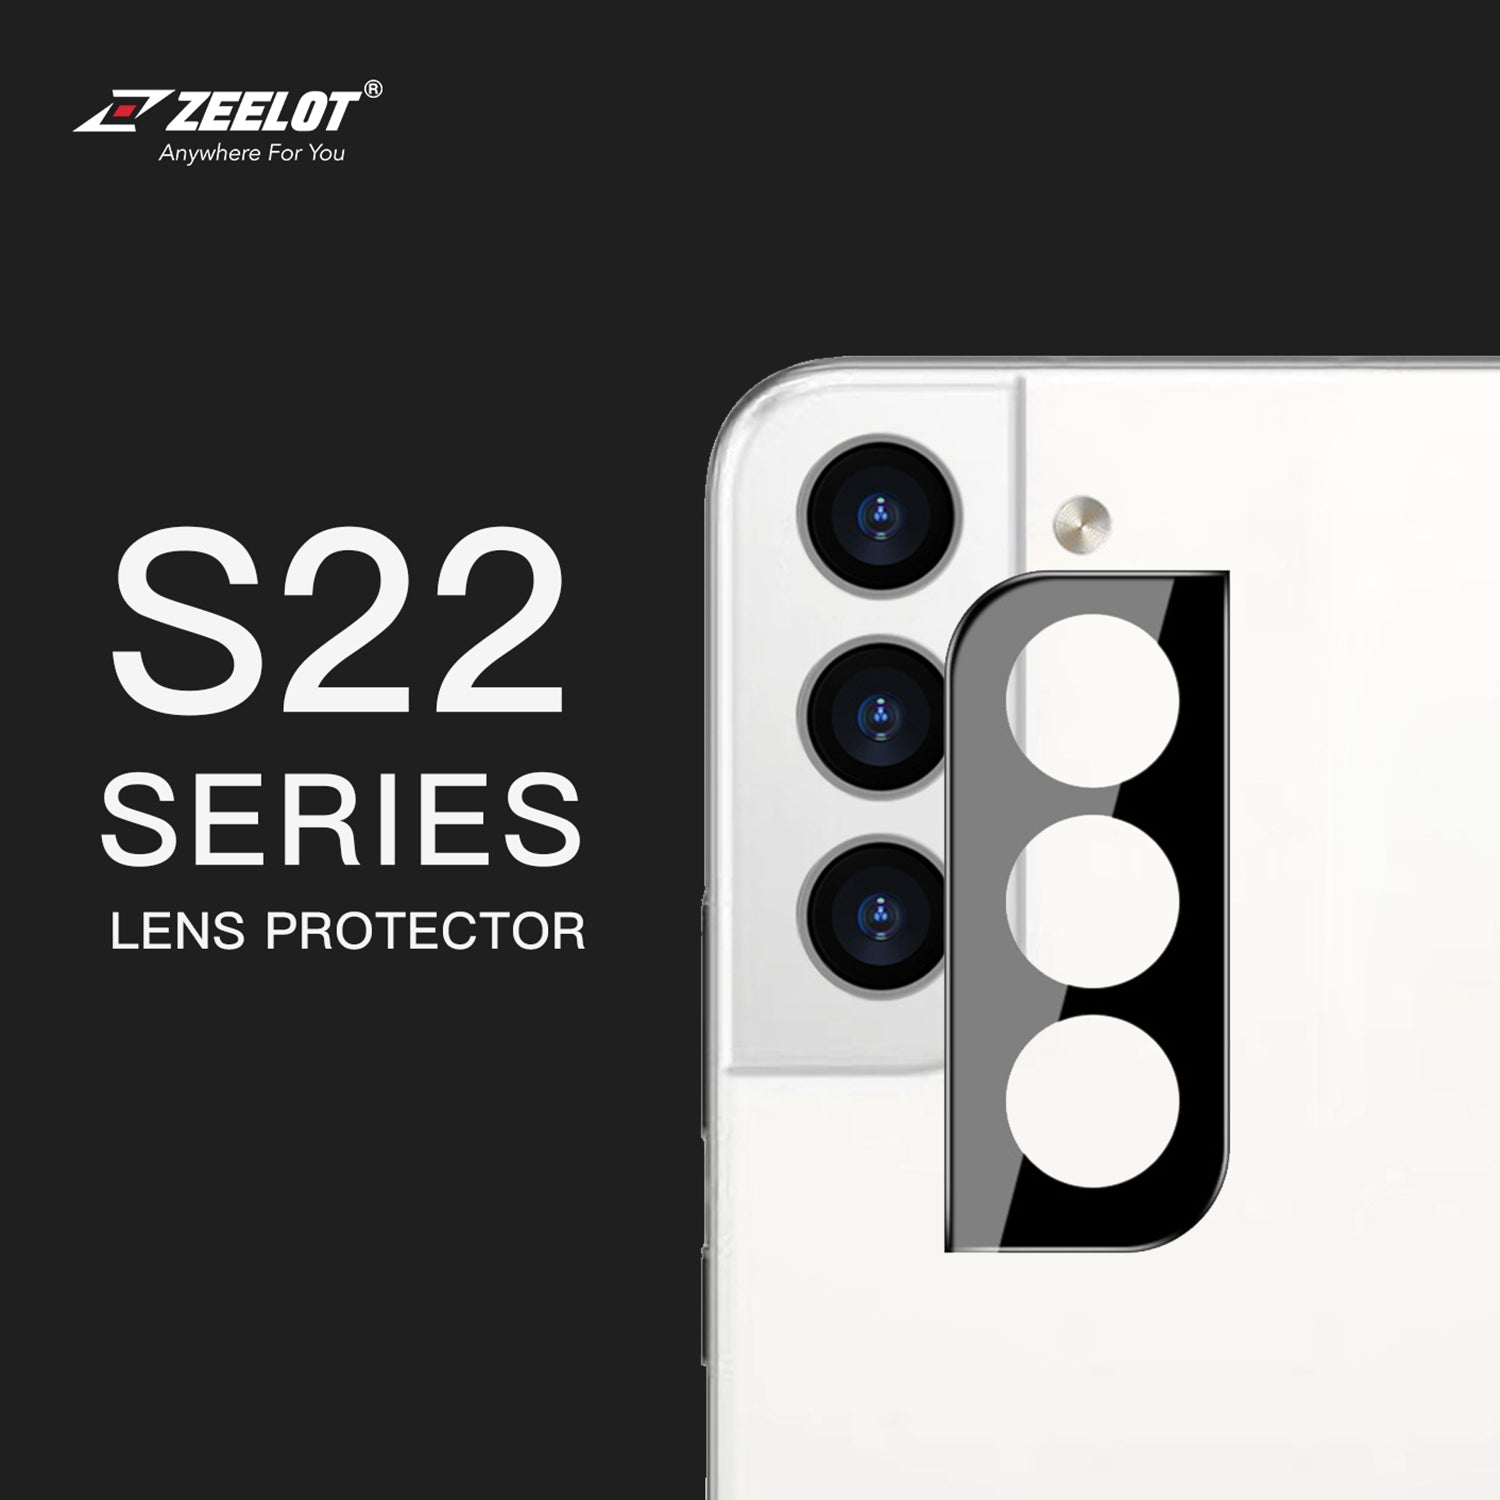 ZEELOT Integrated Camera Lens Protector for Samsung Galaxy S22/22 Plus, Black Default ZEELOT 